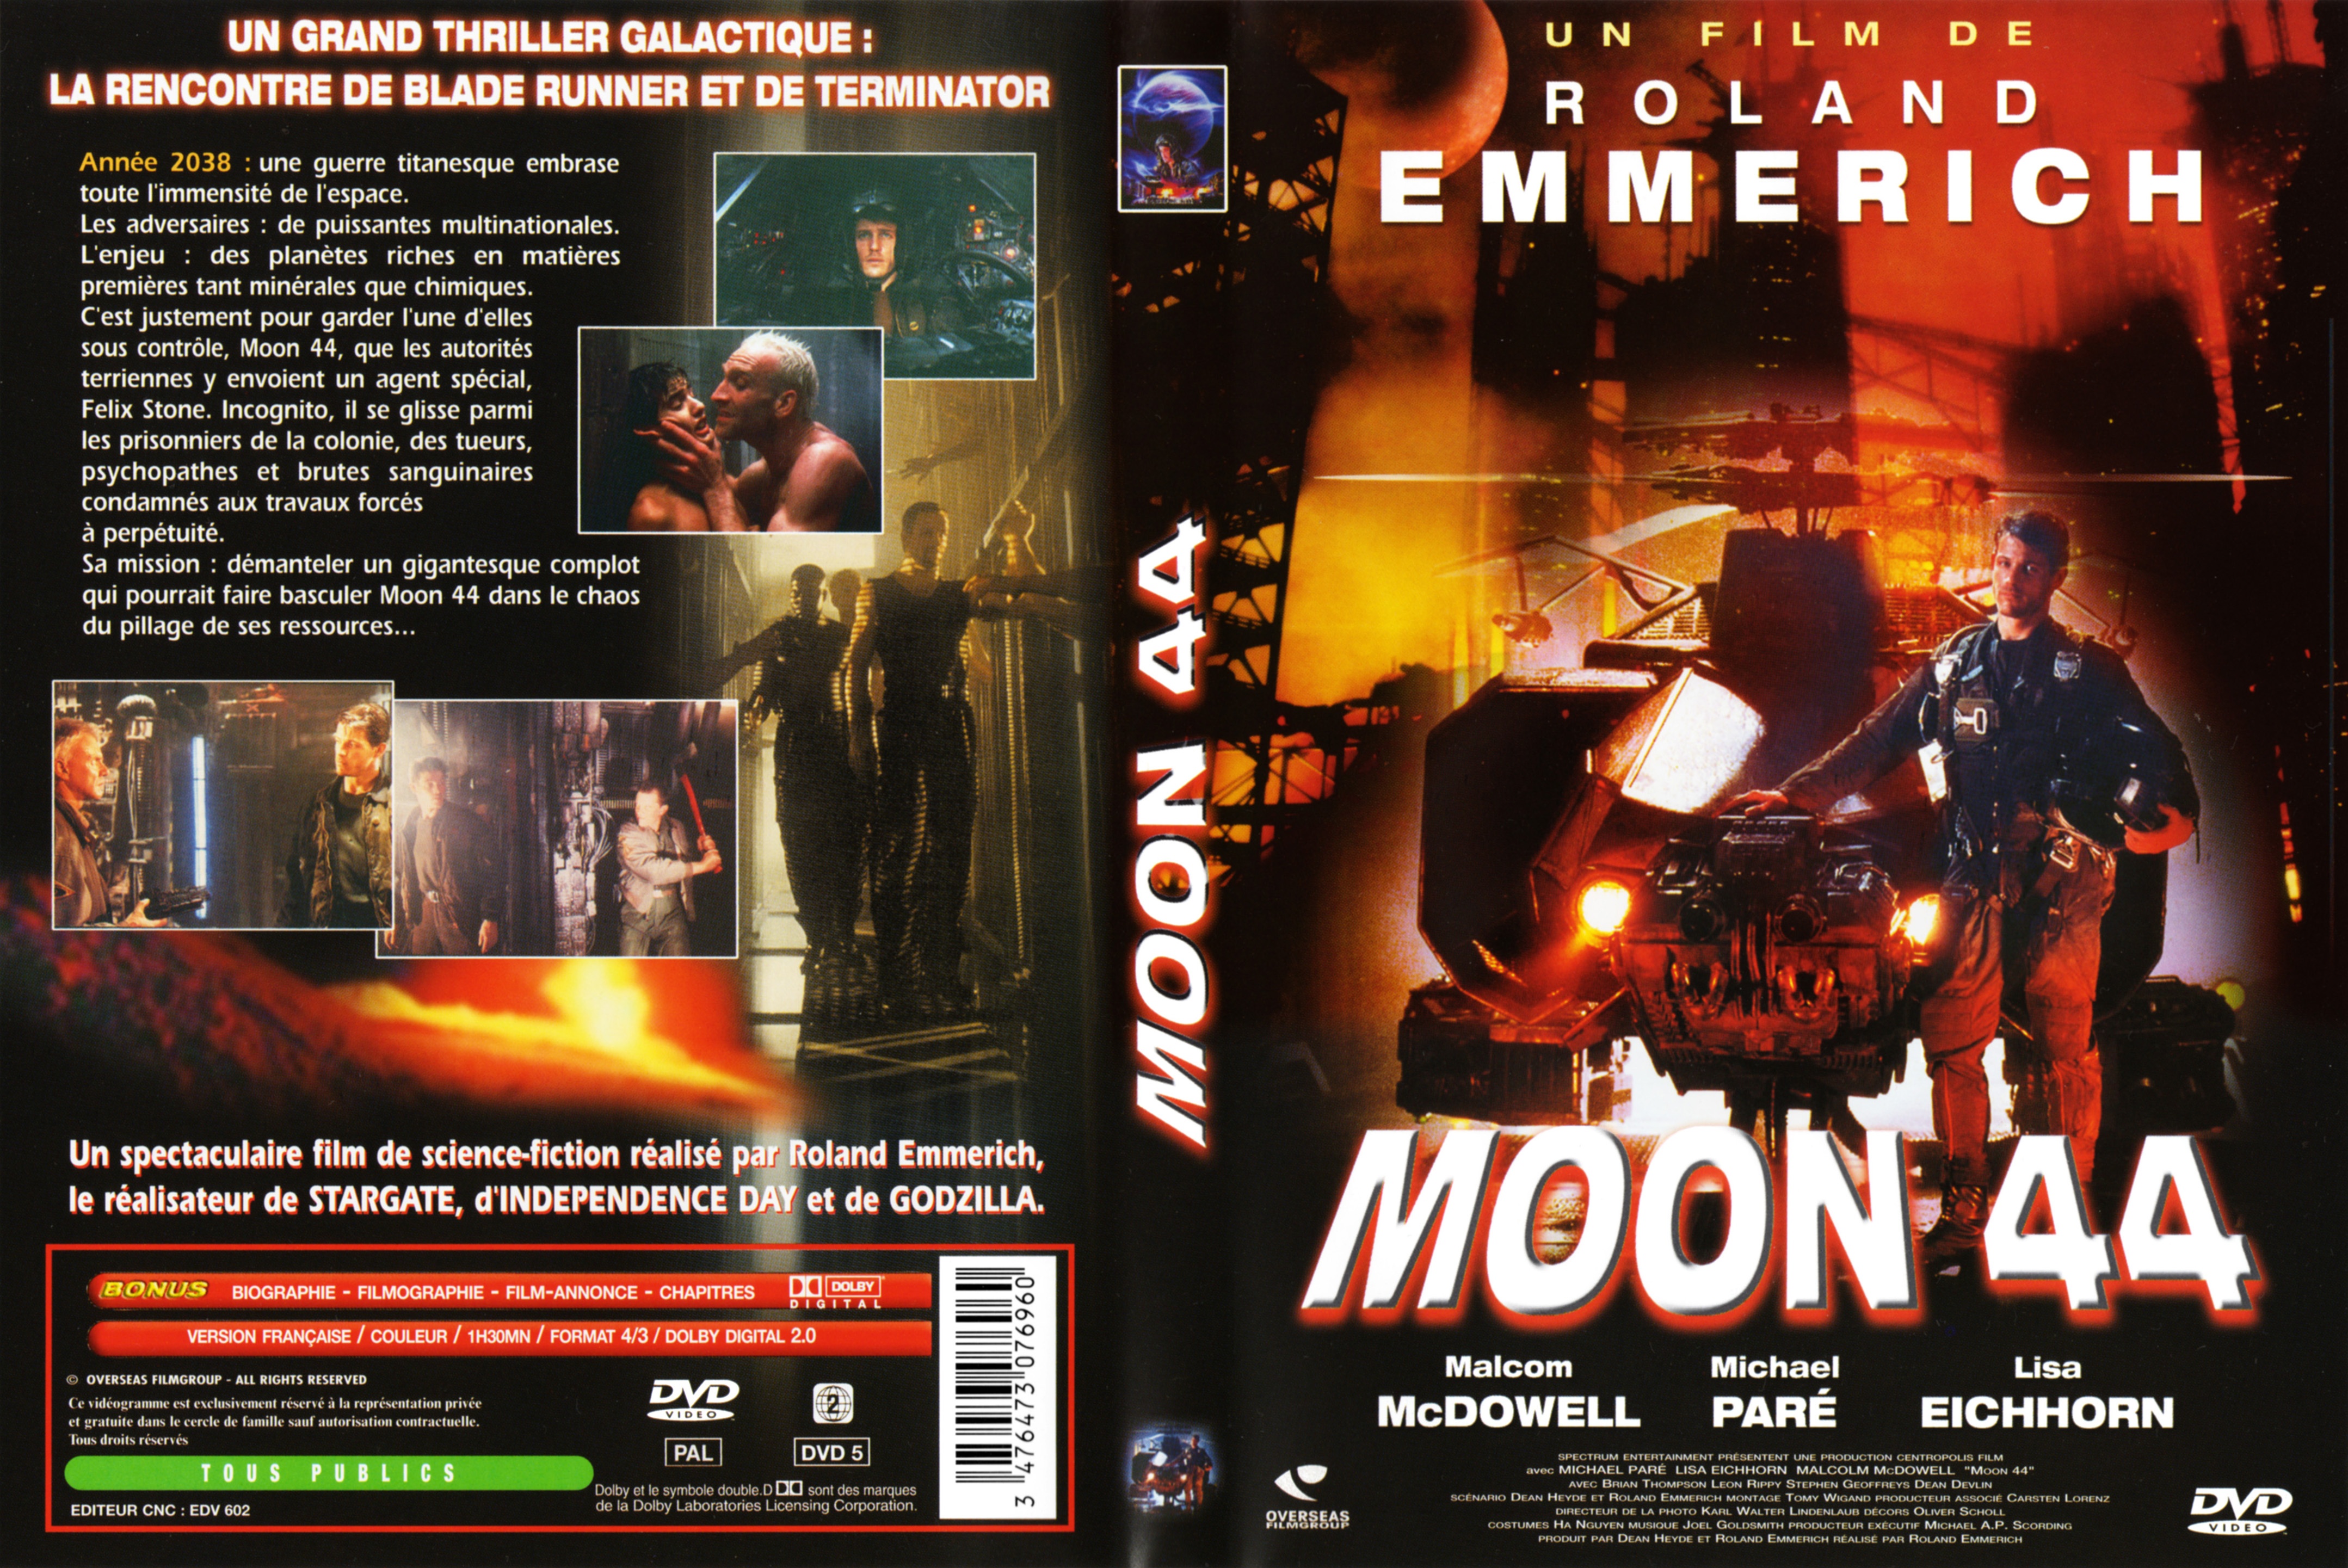 Jaquette DVD Moon 44